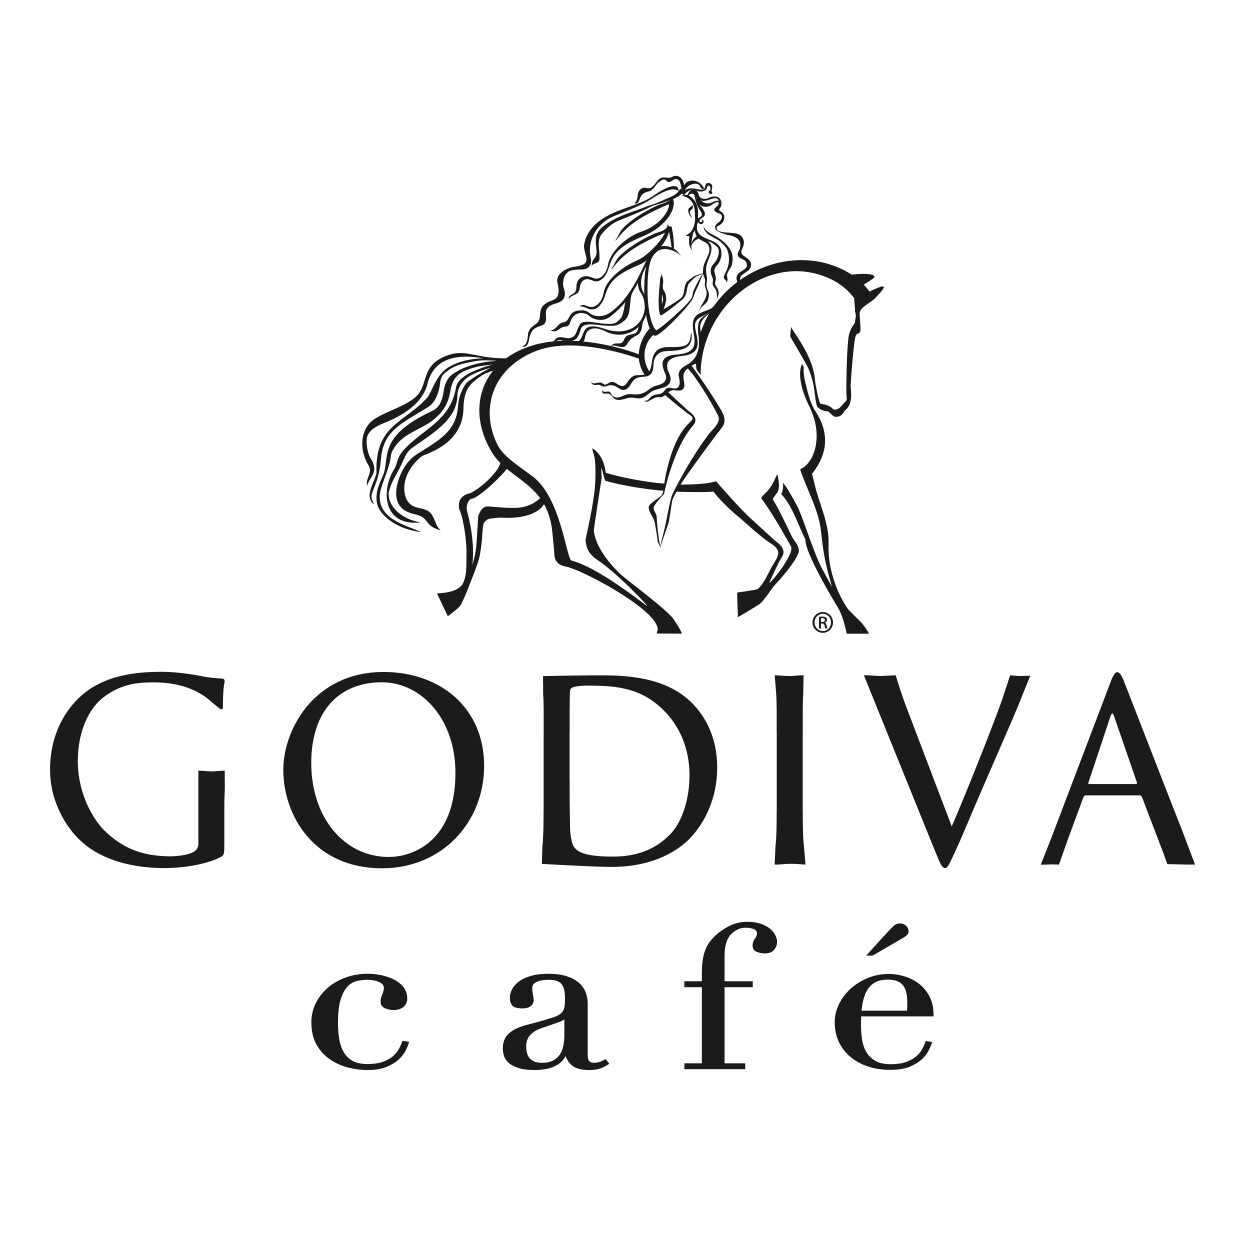 GODIVA café Minatomirai